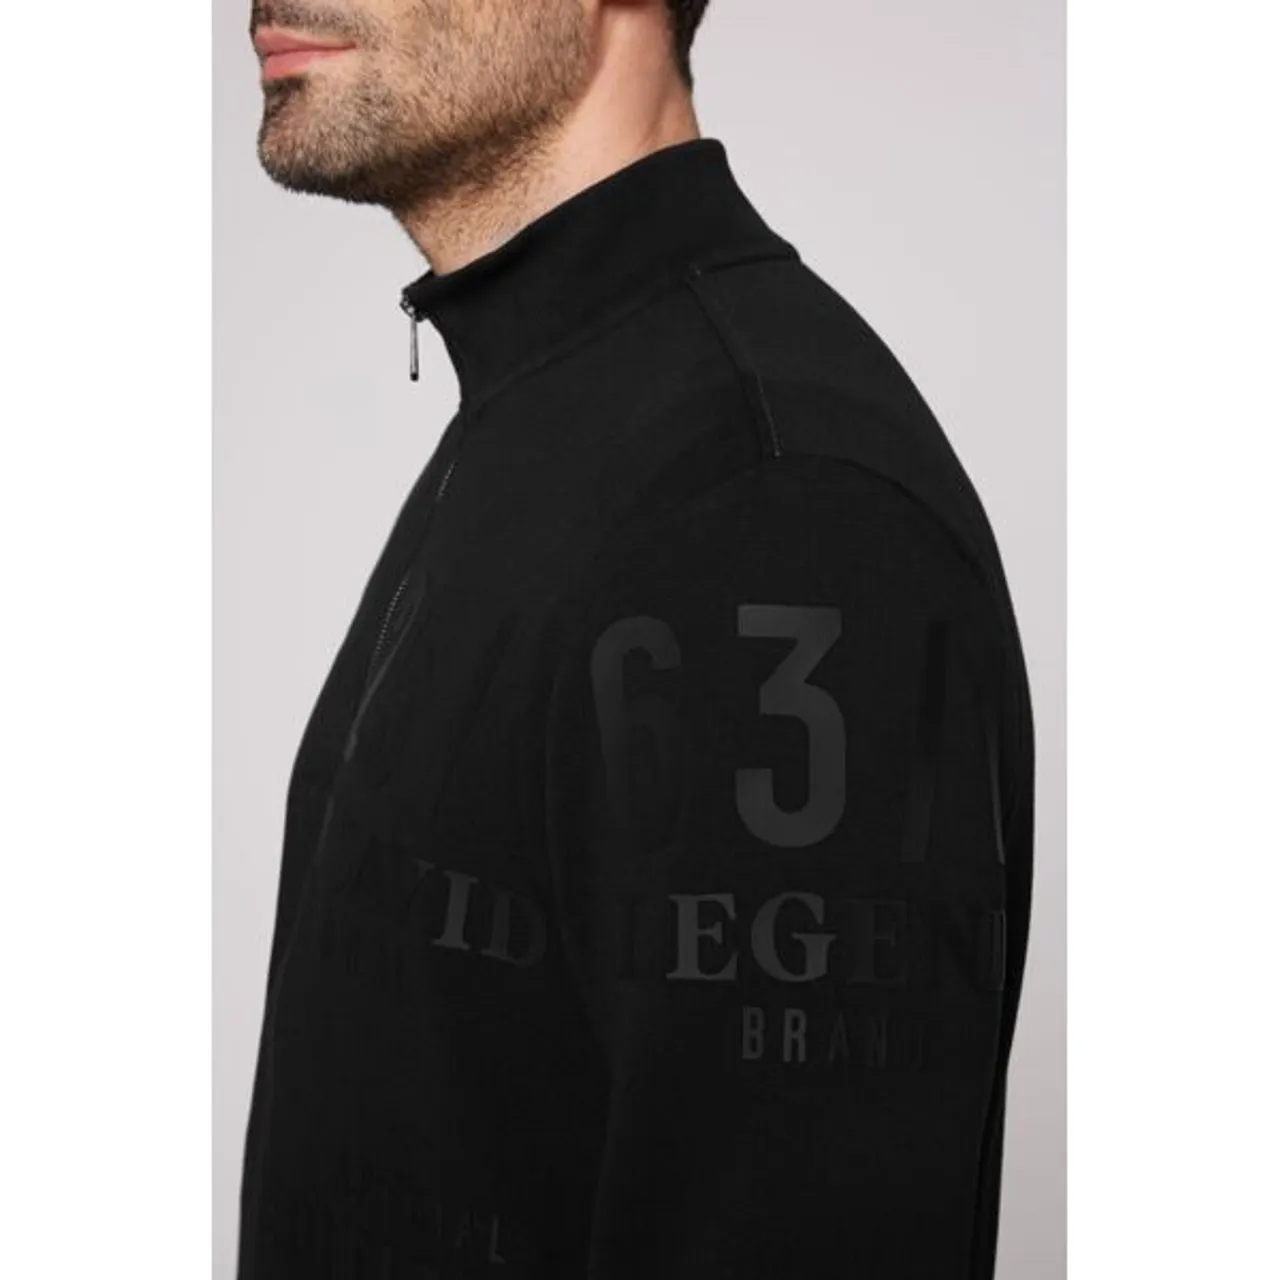 Sweatshirt CAMP DAVID Gr. L, schwarz (black) Herren Sweatshirts -jacken